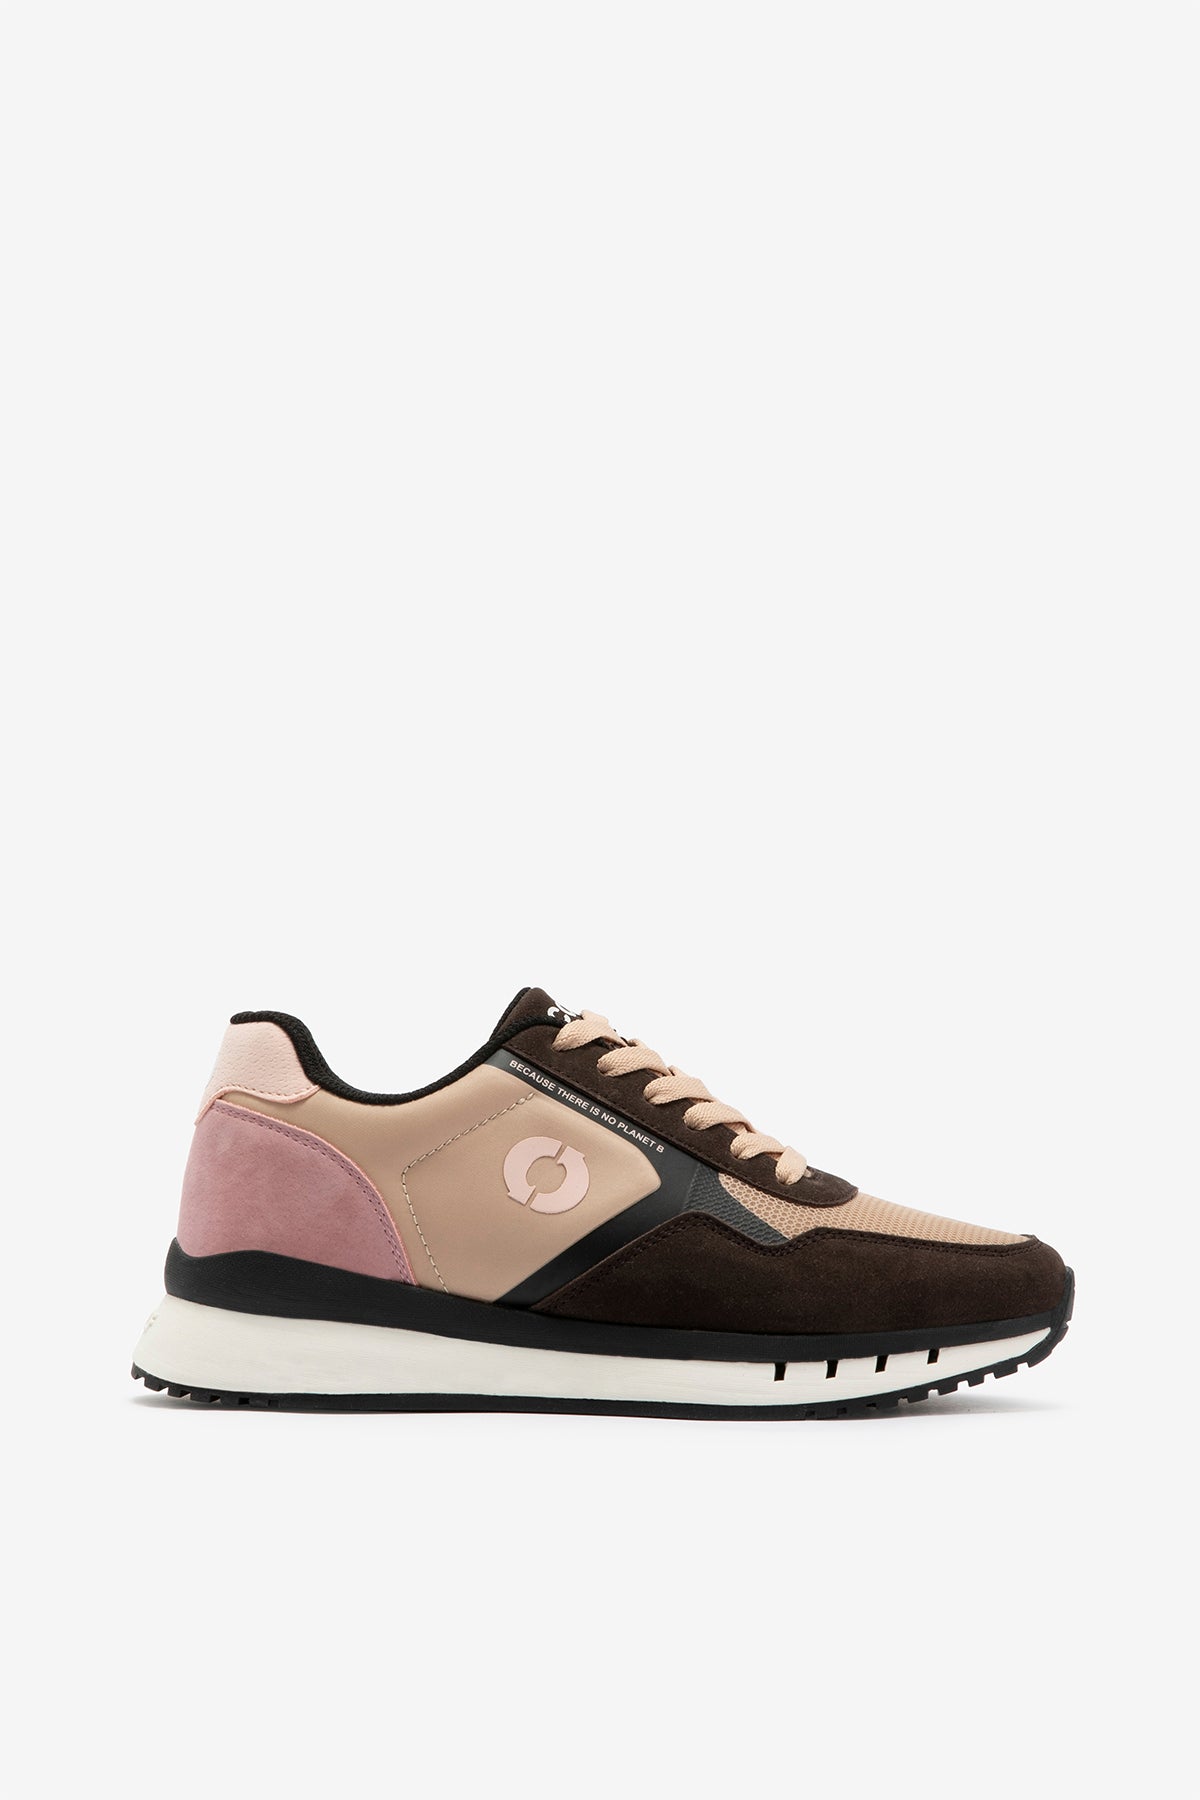 Schuhe Cervino | ECOALF